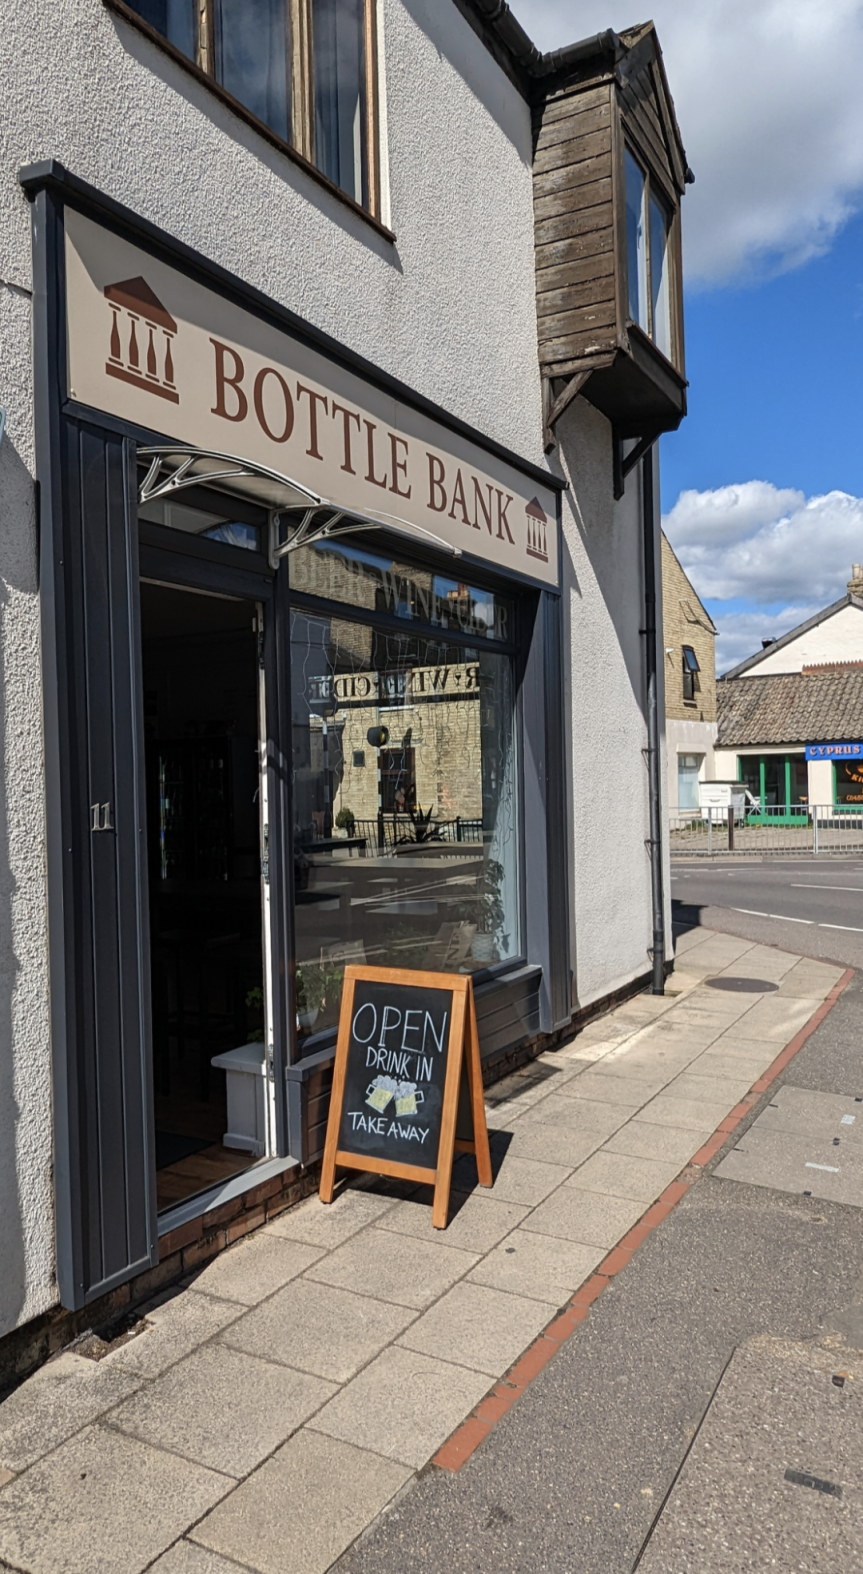 The Bottle Bank – St Ives